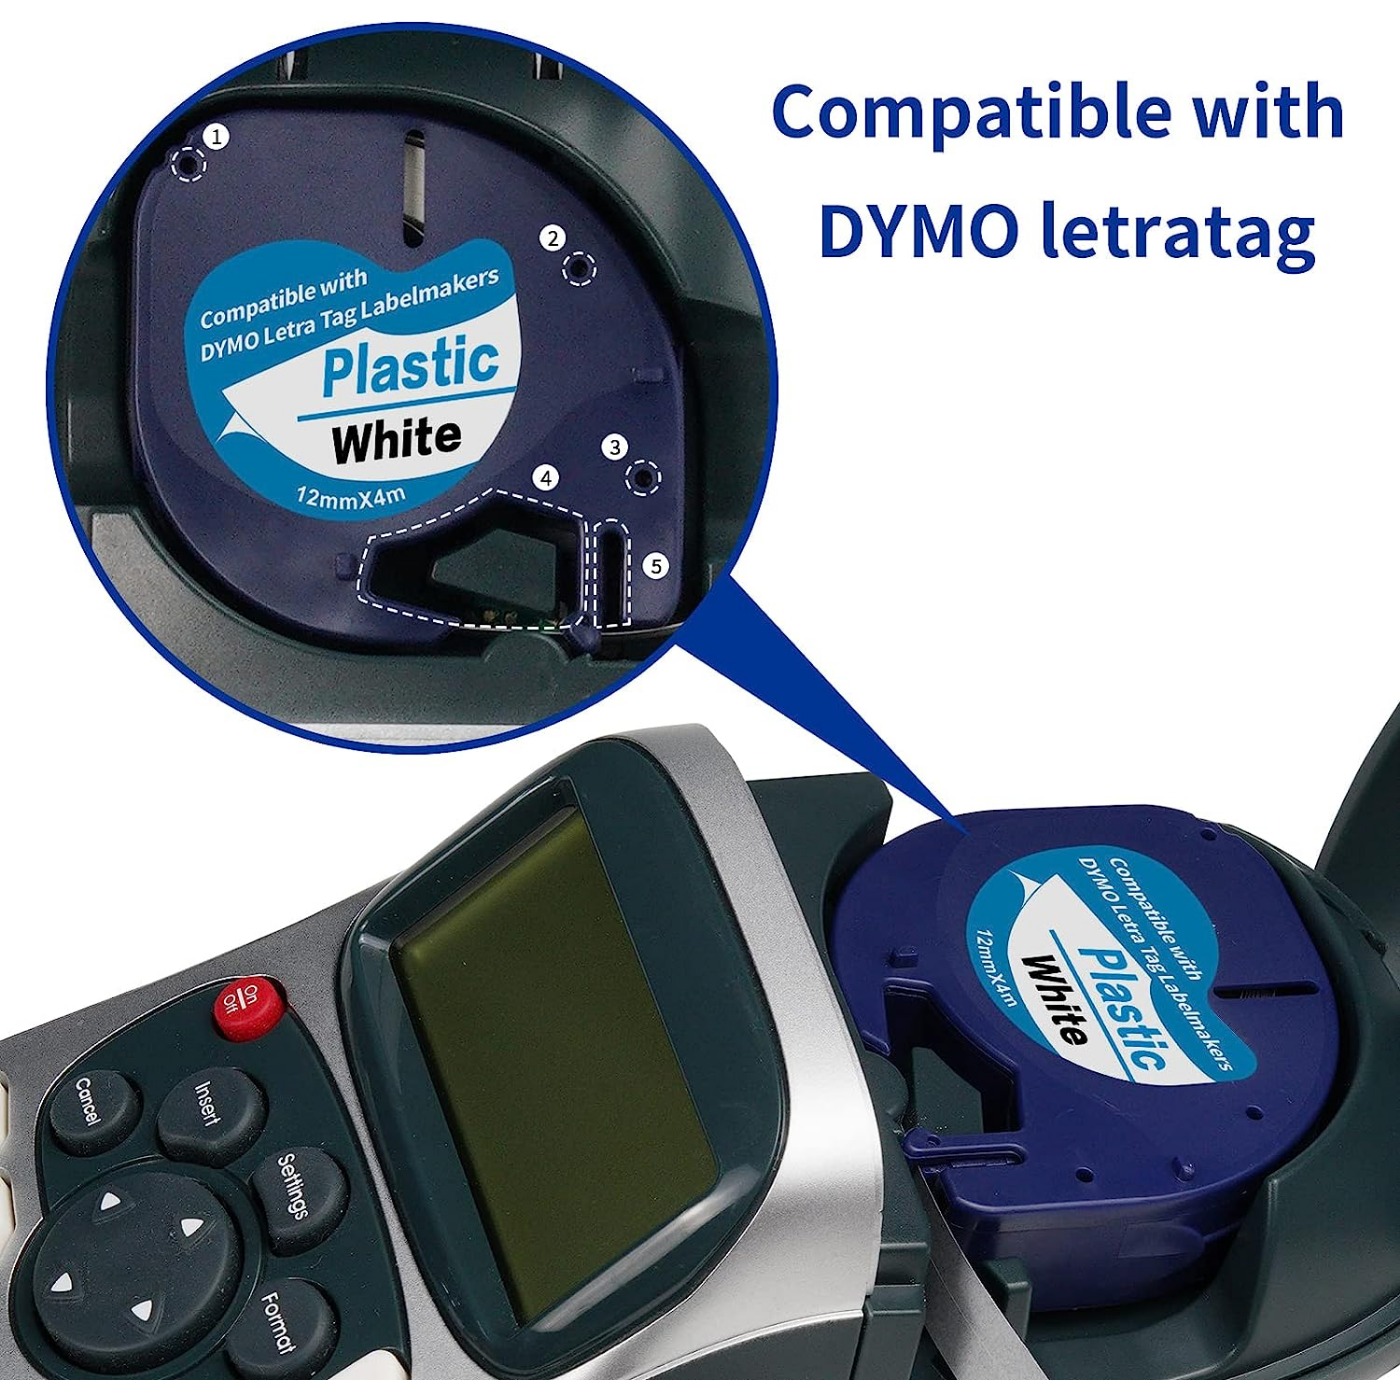 Dymo LetraTag 200B - Wulff Supplies